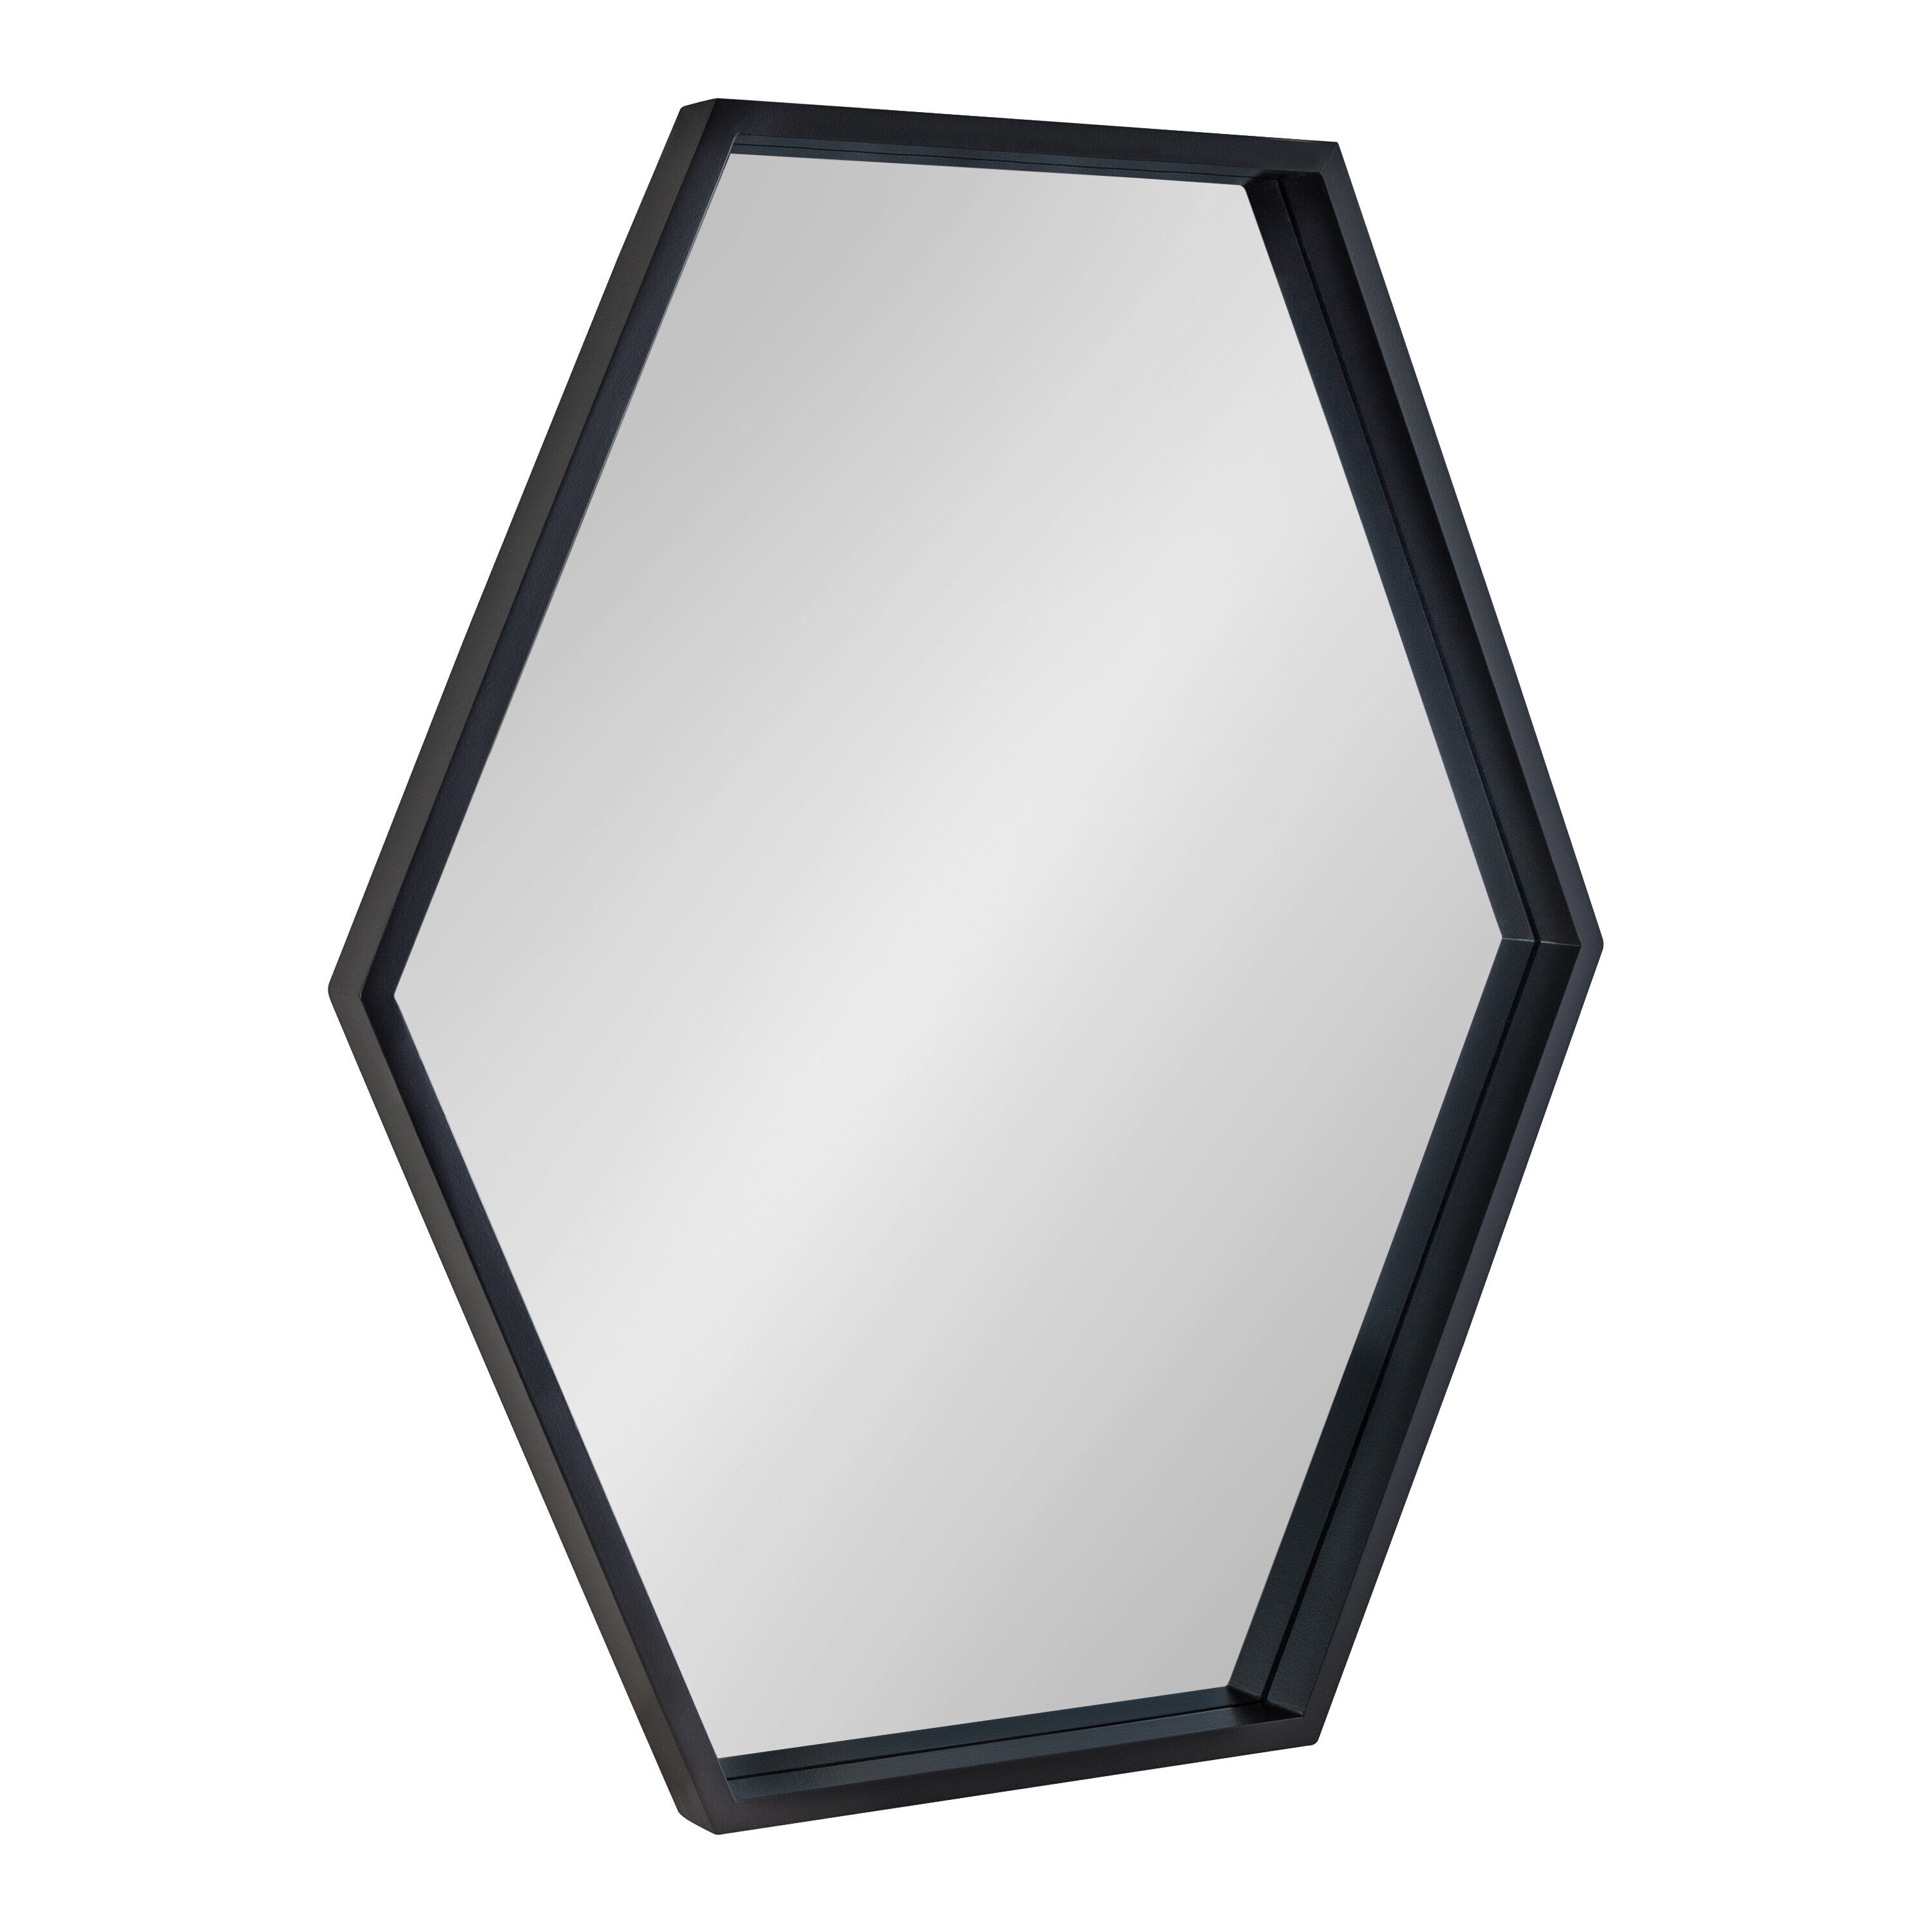  2 PACK Spaz Stix Mirror Chrome & ULTIMATE Black Backer